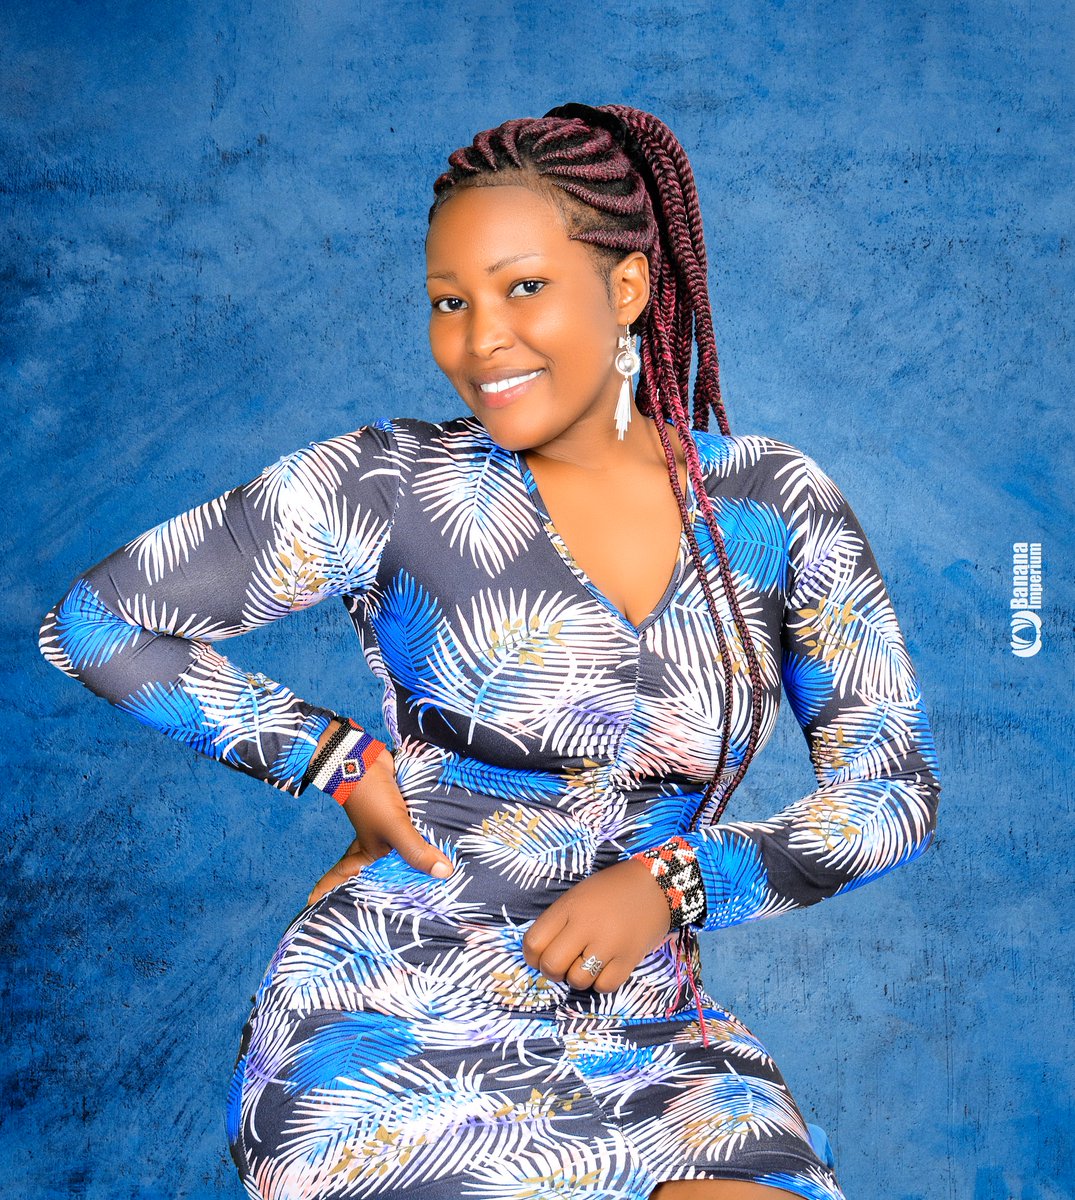 African Girl Magic

For bookings (Photography/photography/Videography)
📞 0721959237
📧 bookbananaimperium@gmail.com
📍 Eldoret, Kenya

#blackgirlmagic #photography 
#raila #BabuOwino #blackskin #MaandamanoWednesdayToFriday